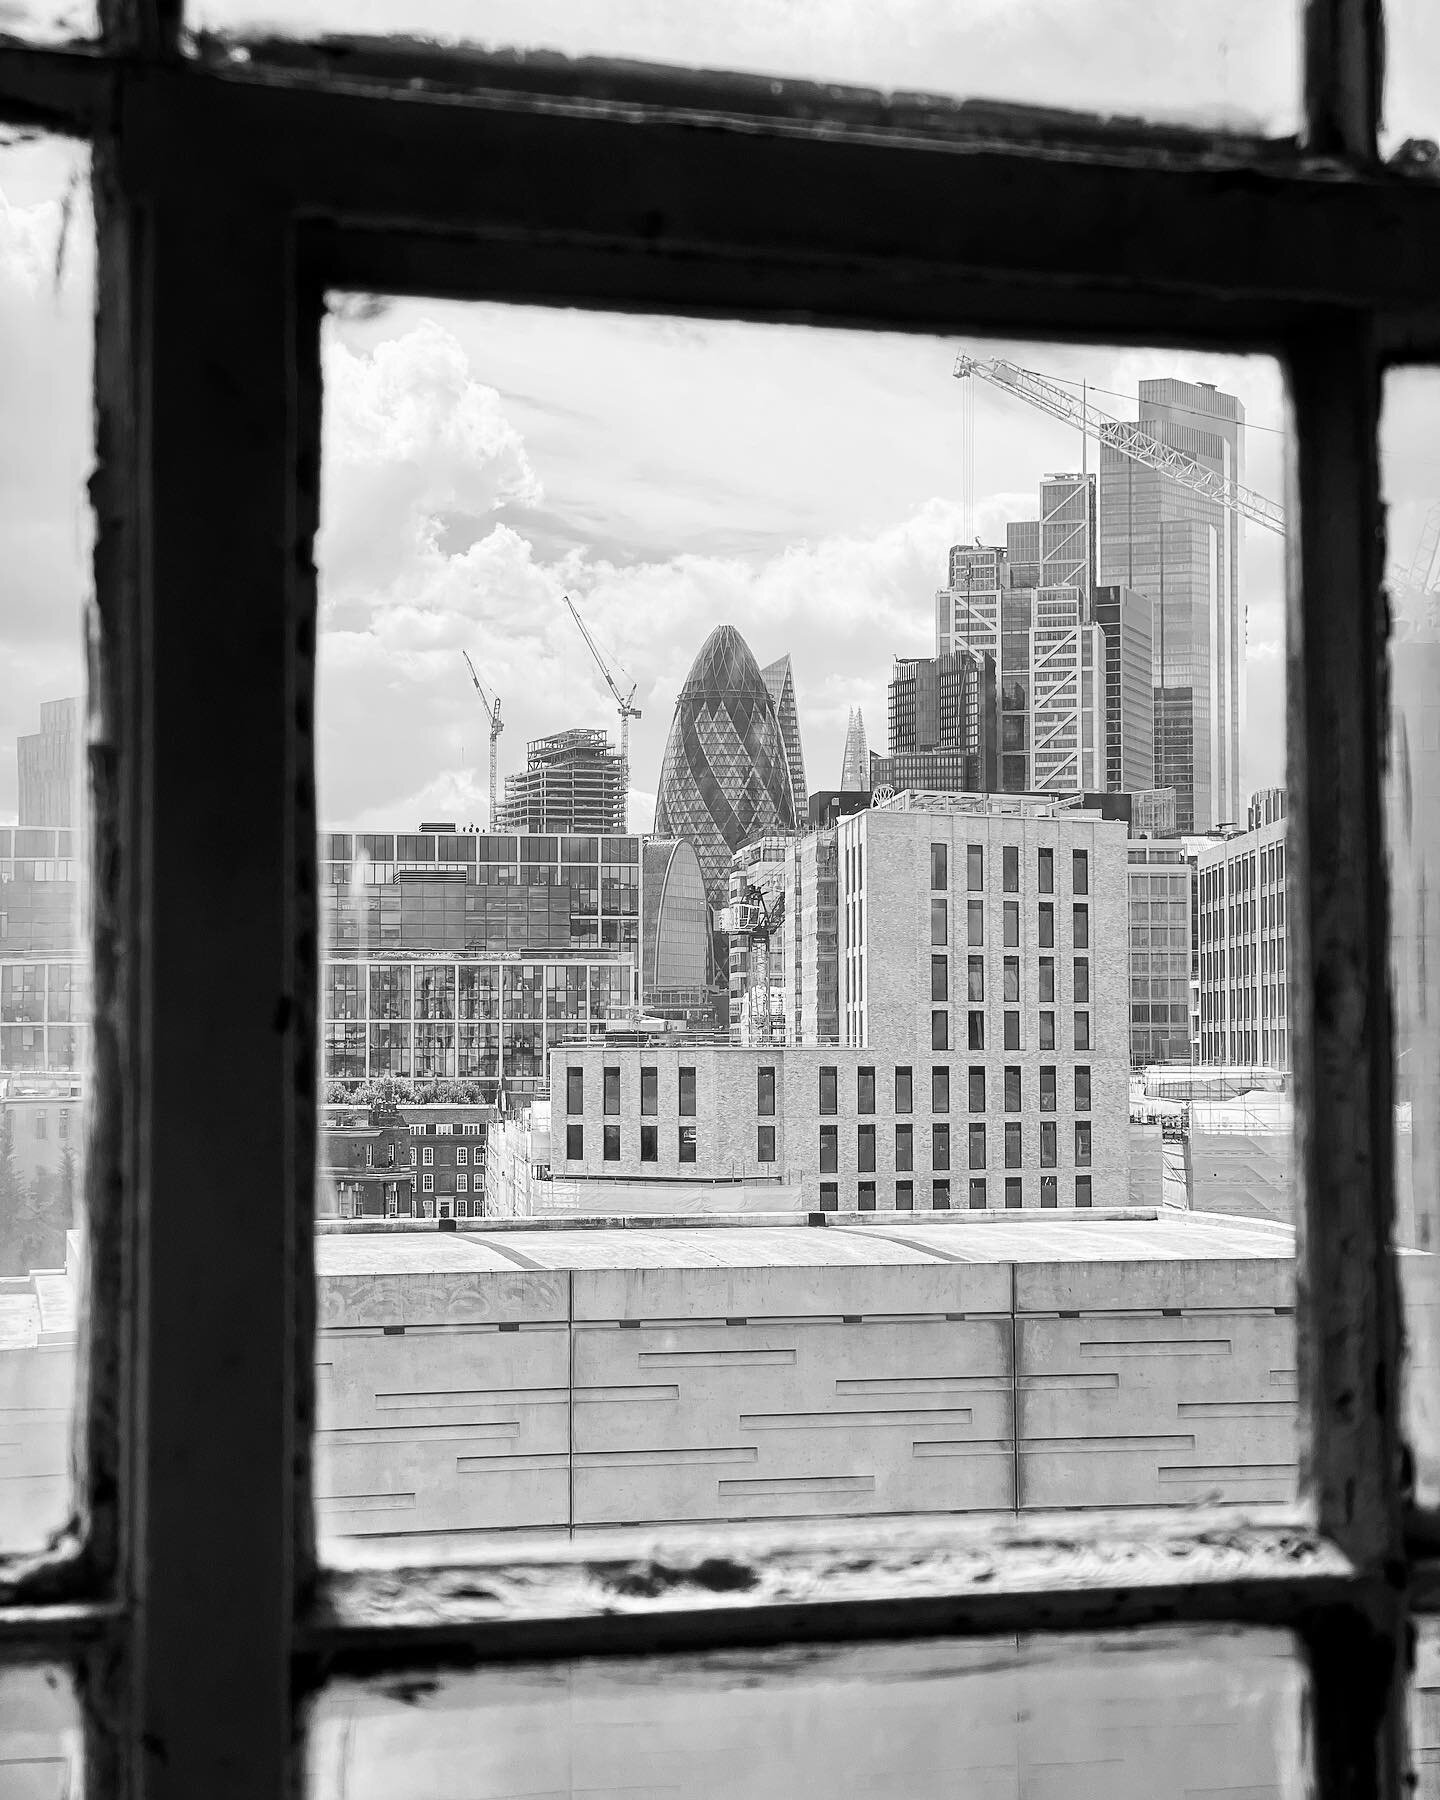 LONDON #london #view #londonlandmarks #gherkin #thegherkin #blackandwhitephotography #blackandwhite #streetphotography #streetphotographer #londoner #londonlife #shoreditch #eastlondon #ldn